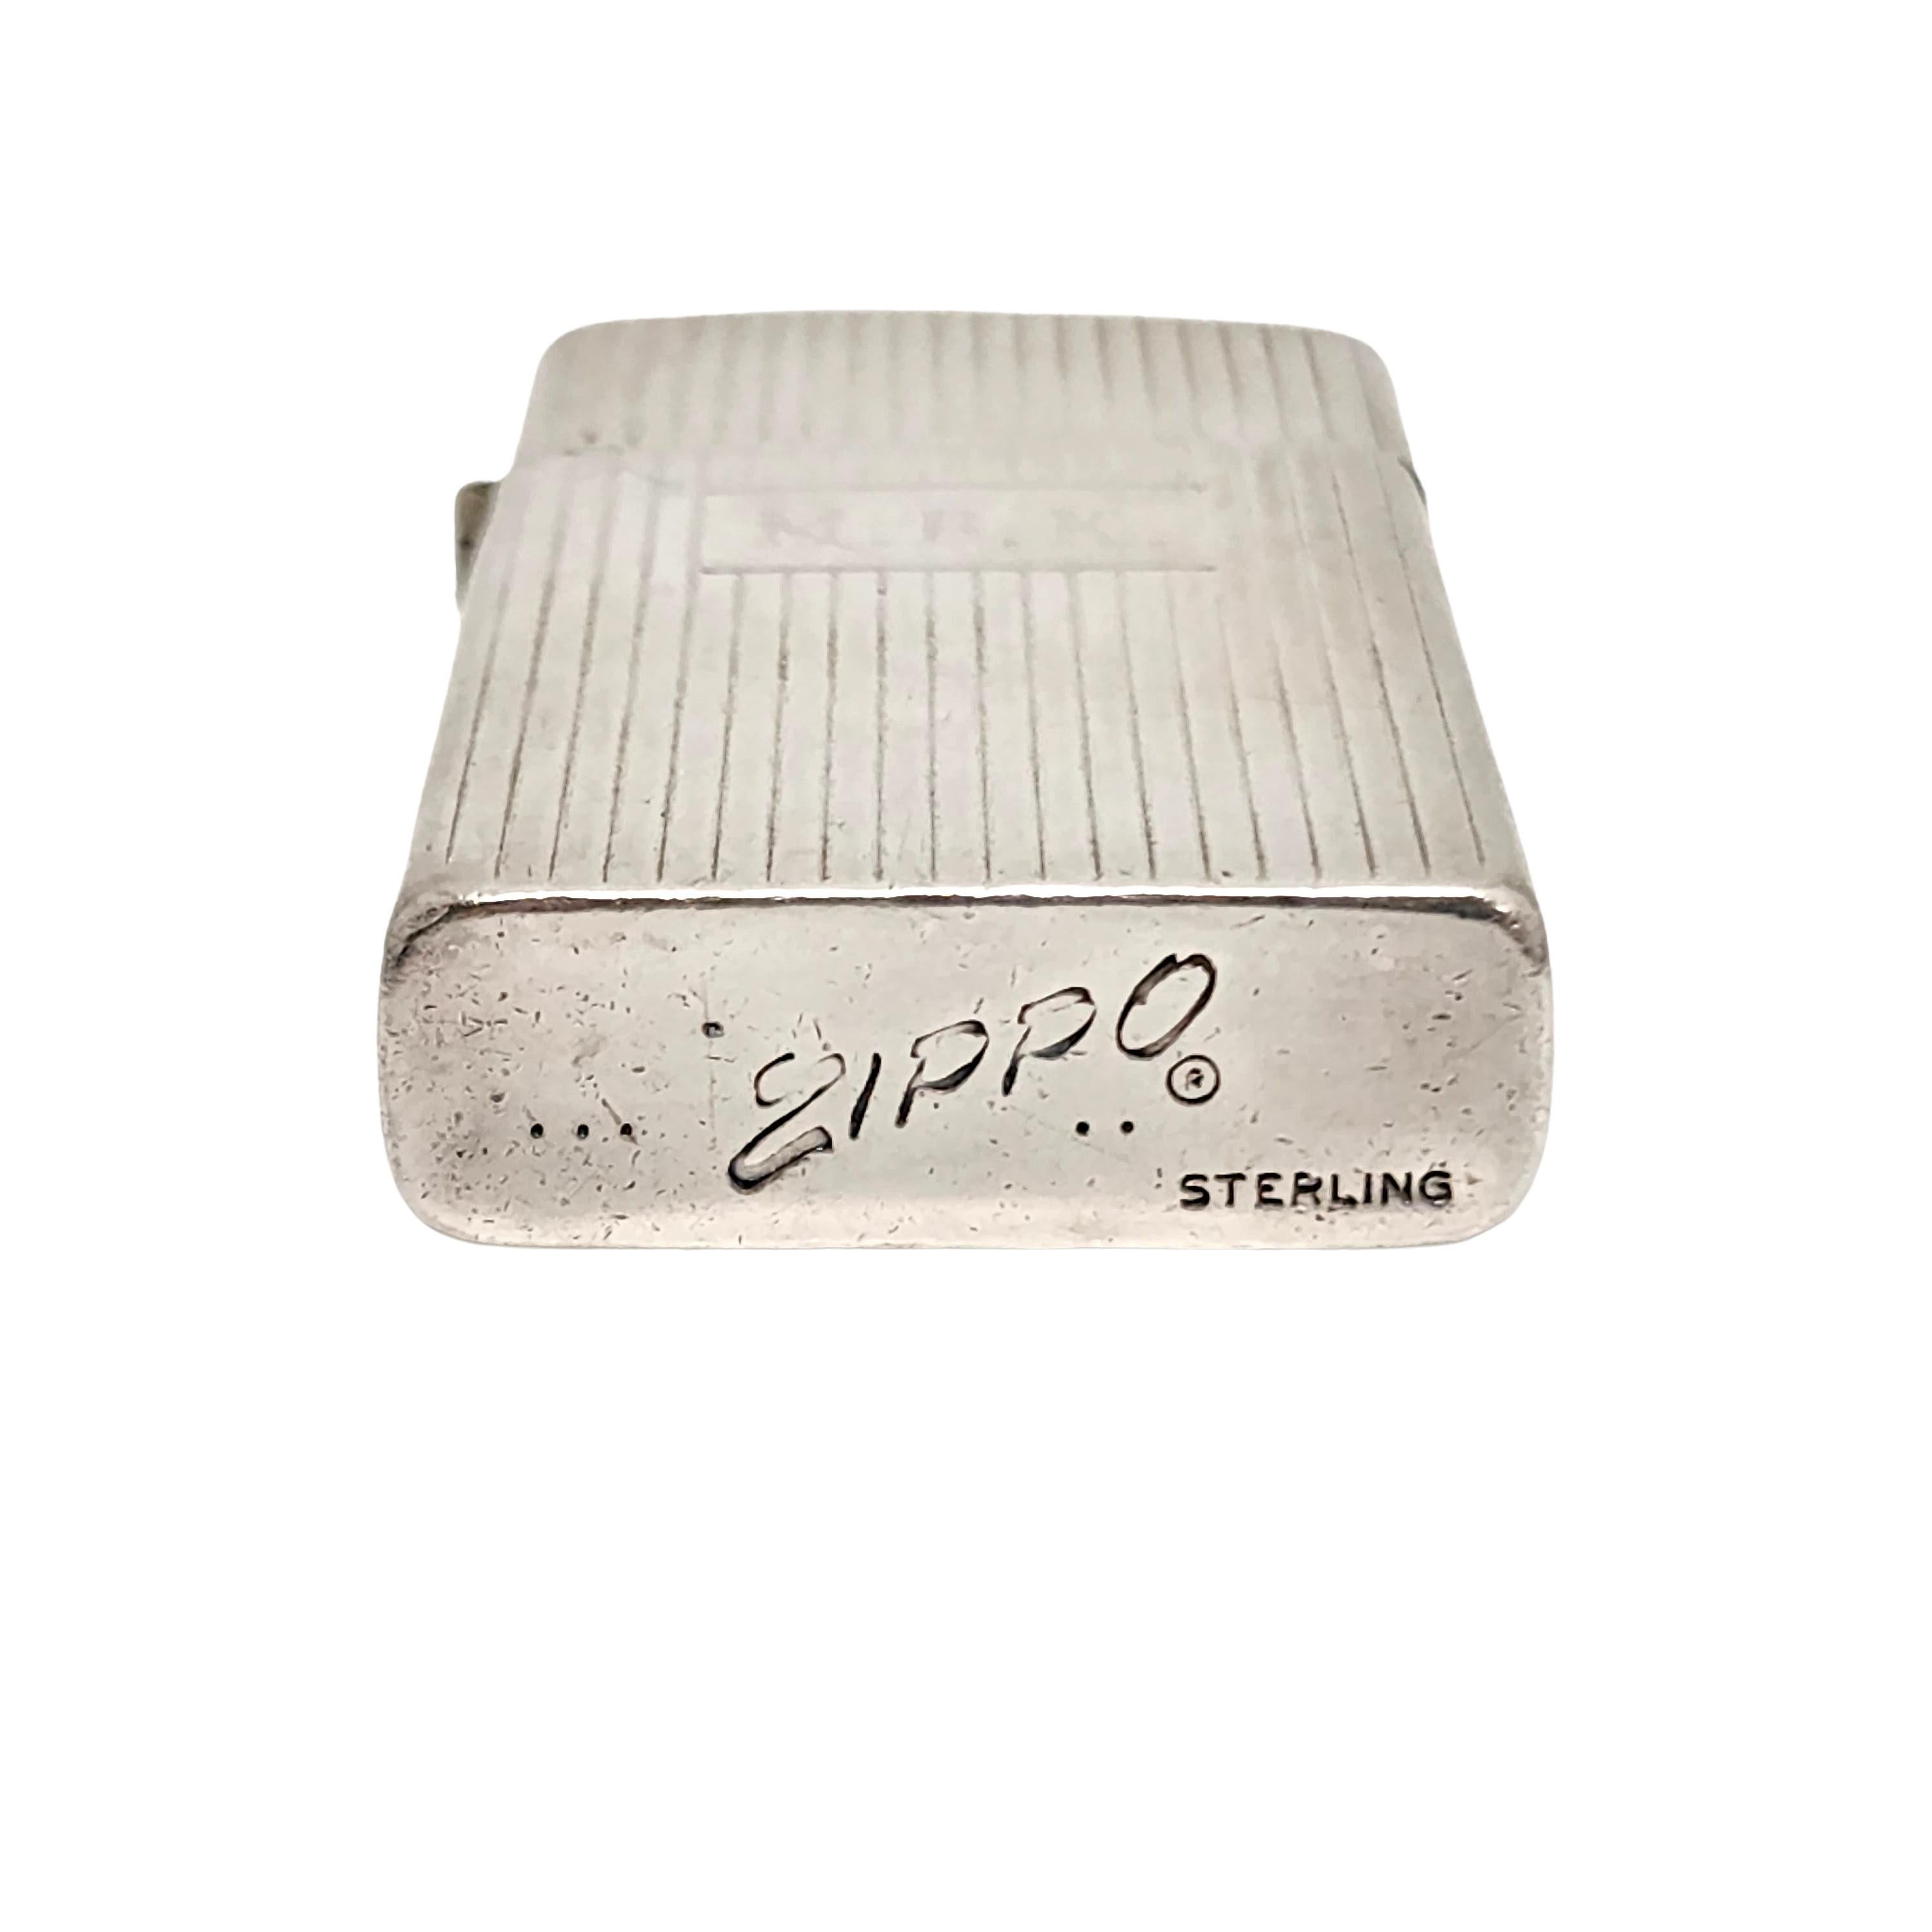 Zippo Sterling Silver Engine Turned Slim Lighter Case Holder w/ Monogram #13040 For Sale 11